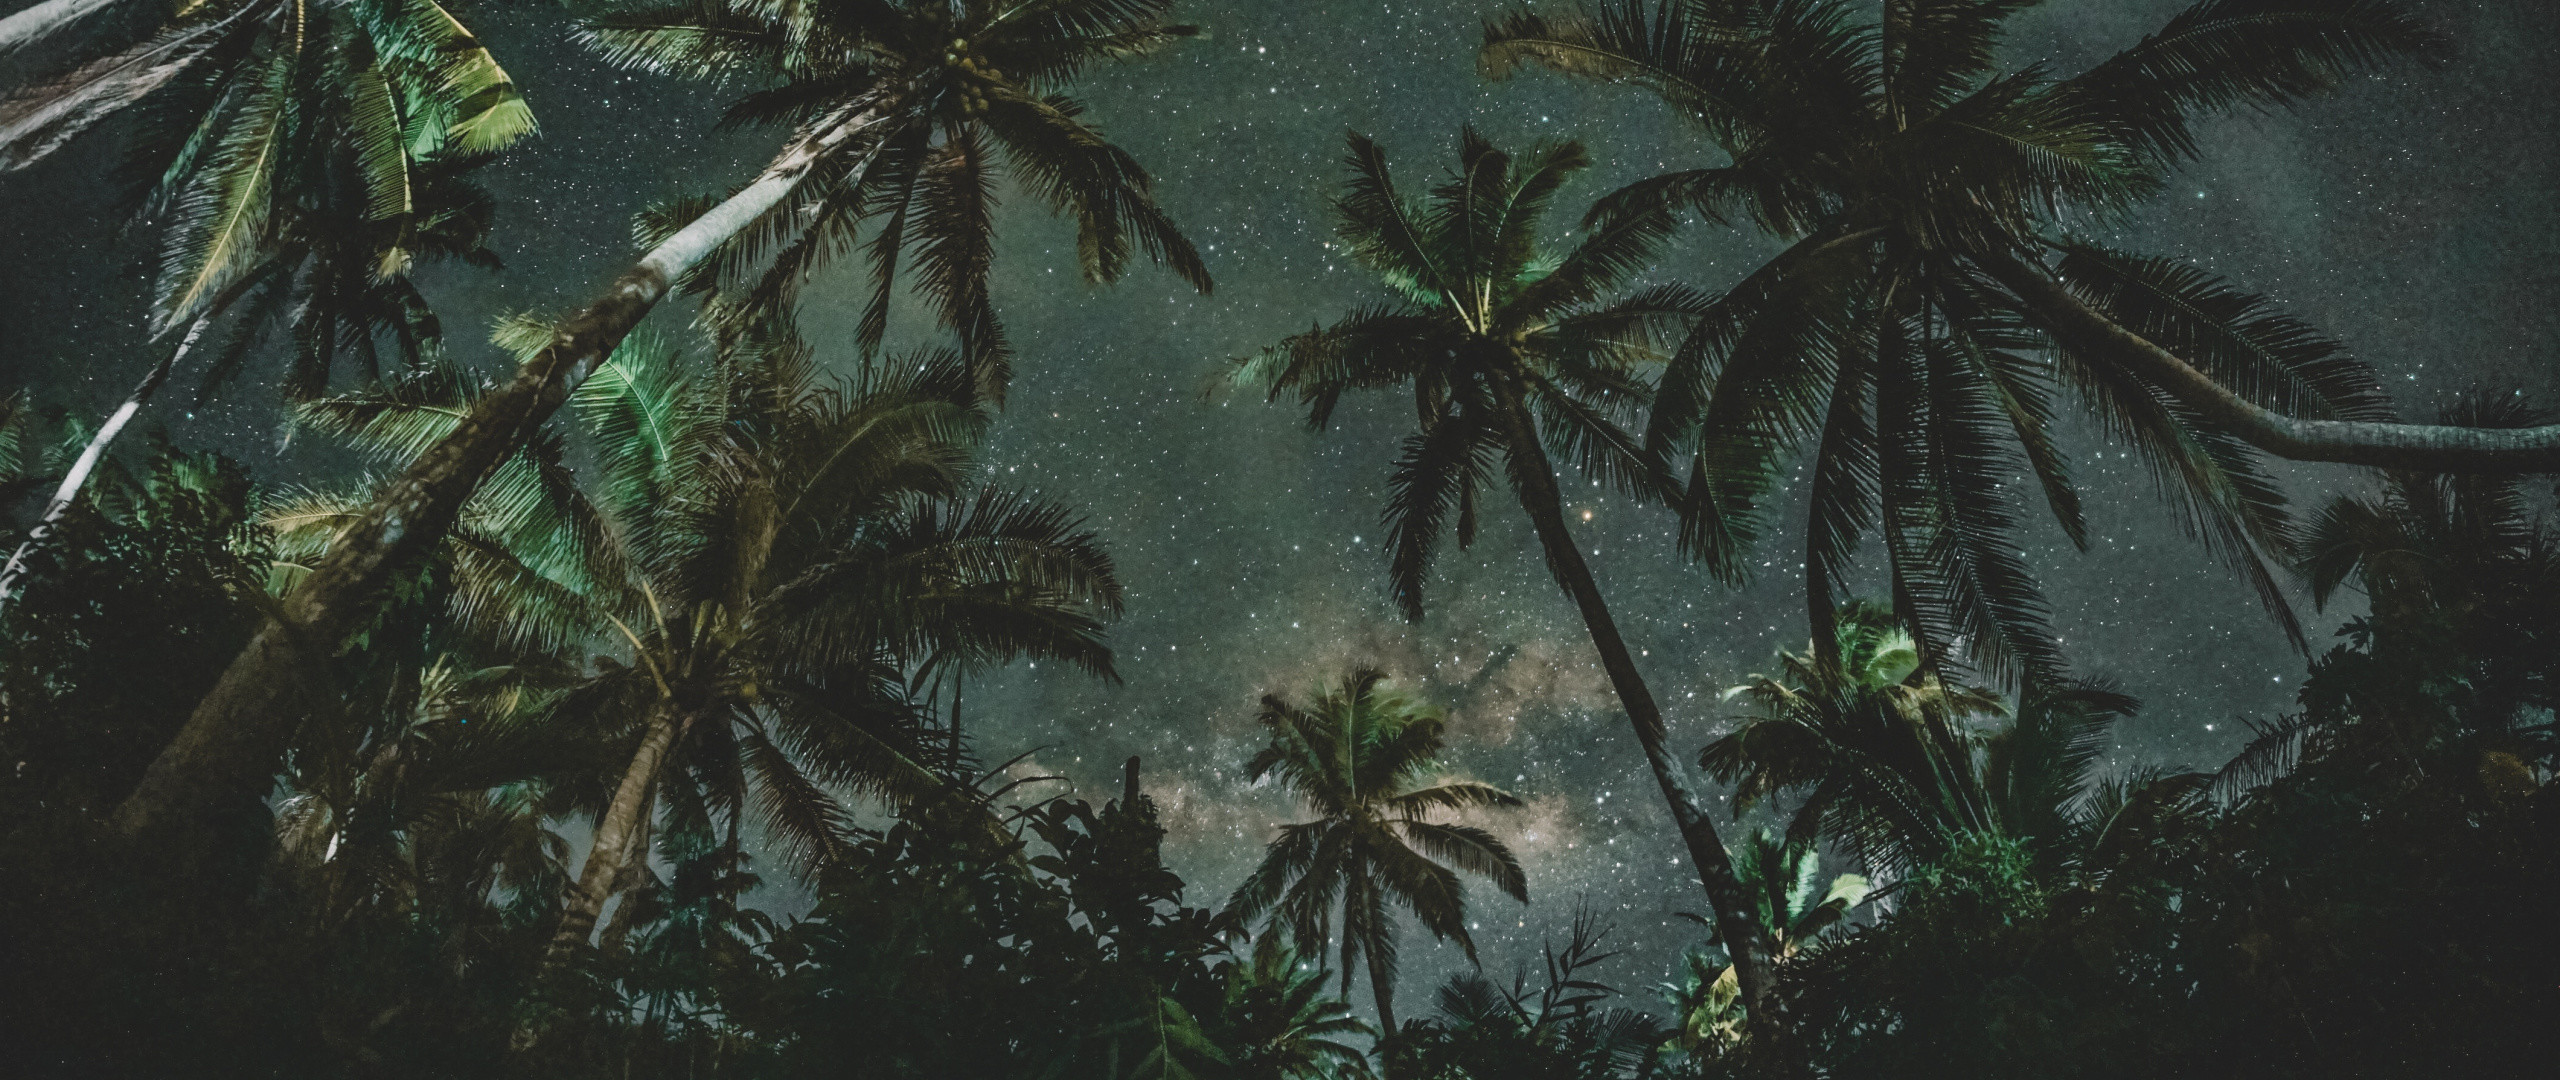 2560x1080 Palm trees, night, starry night, nature,  wallpaper